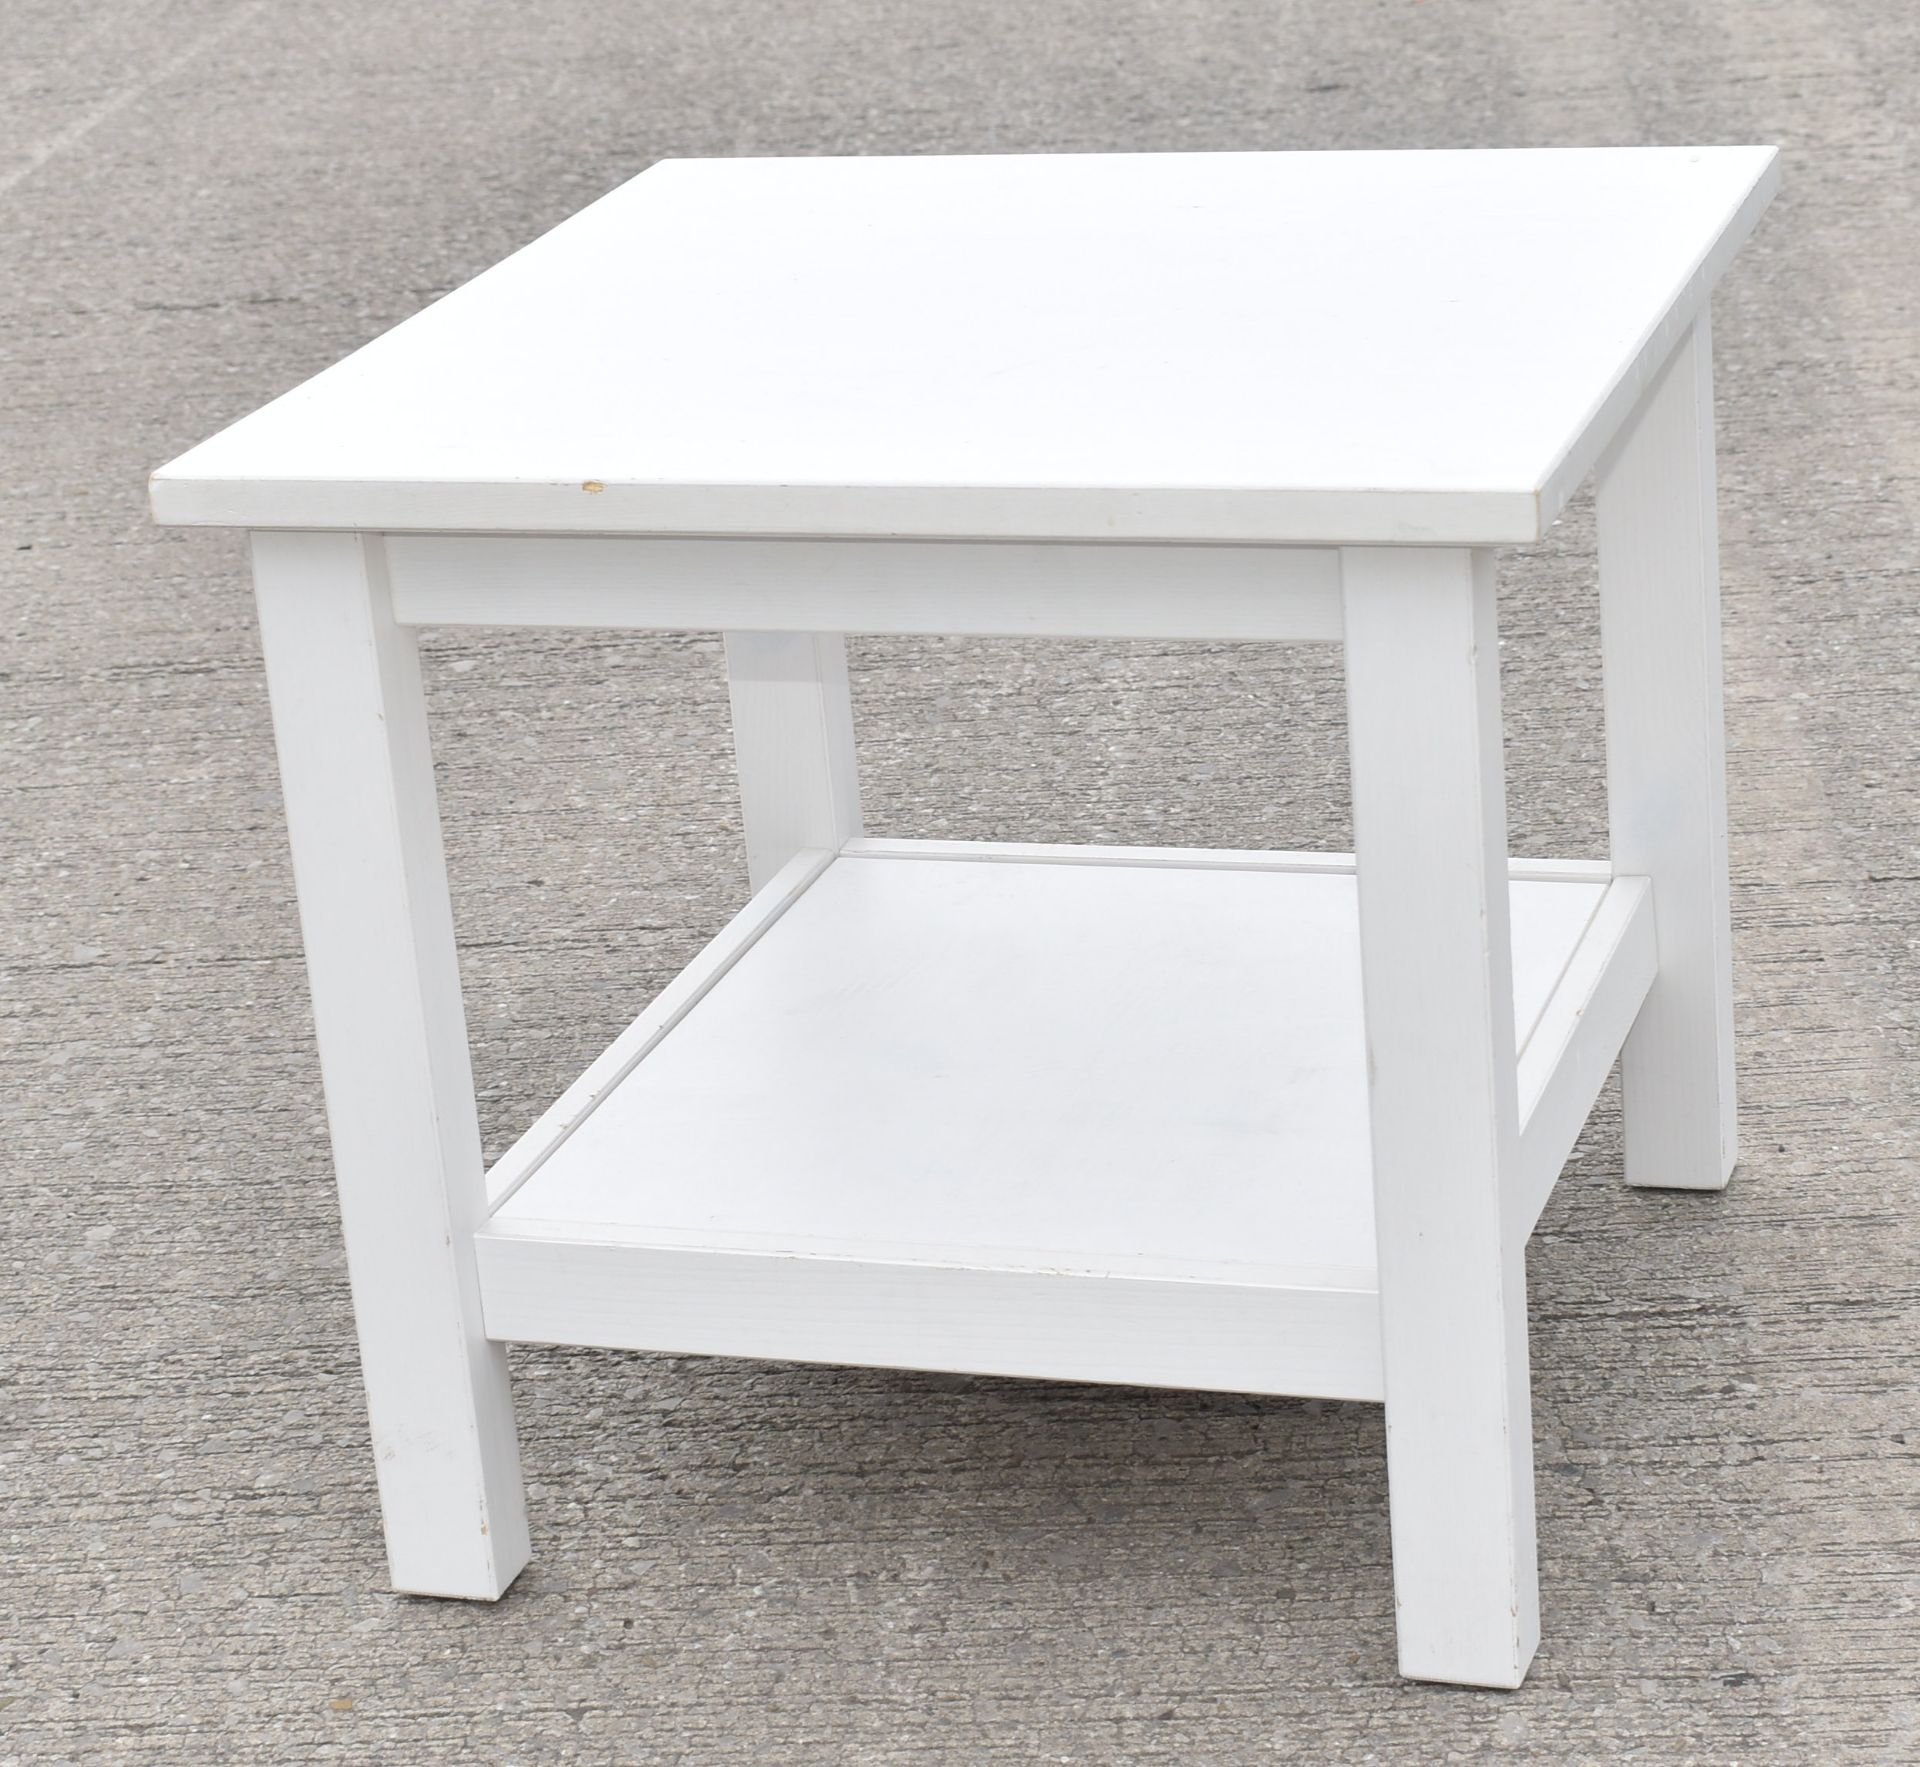 1 x White Square Wooden Table - 56x56x51cm - Ref: K289 - CL905 - Location: Altrincham WA14*Stock - Image 2 of 9